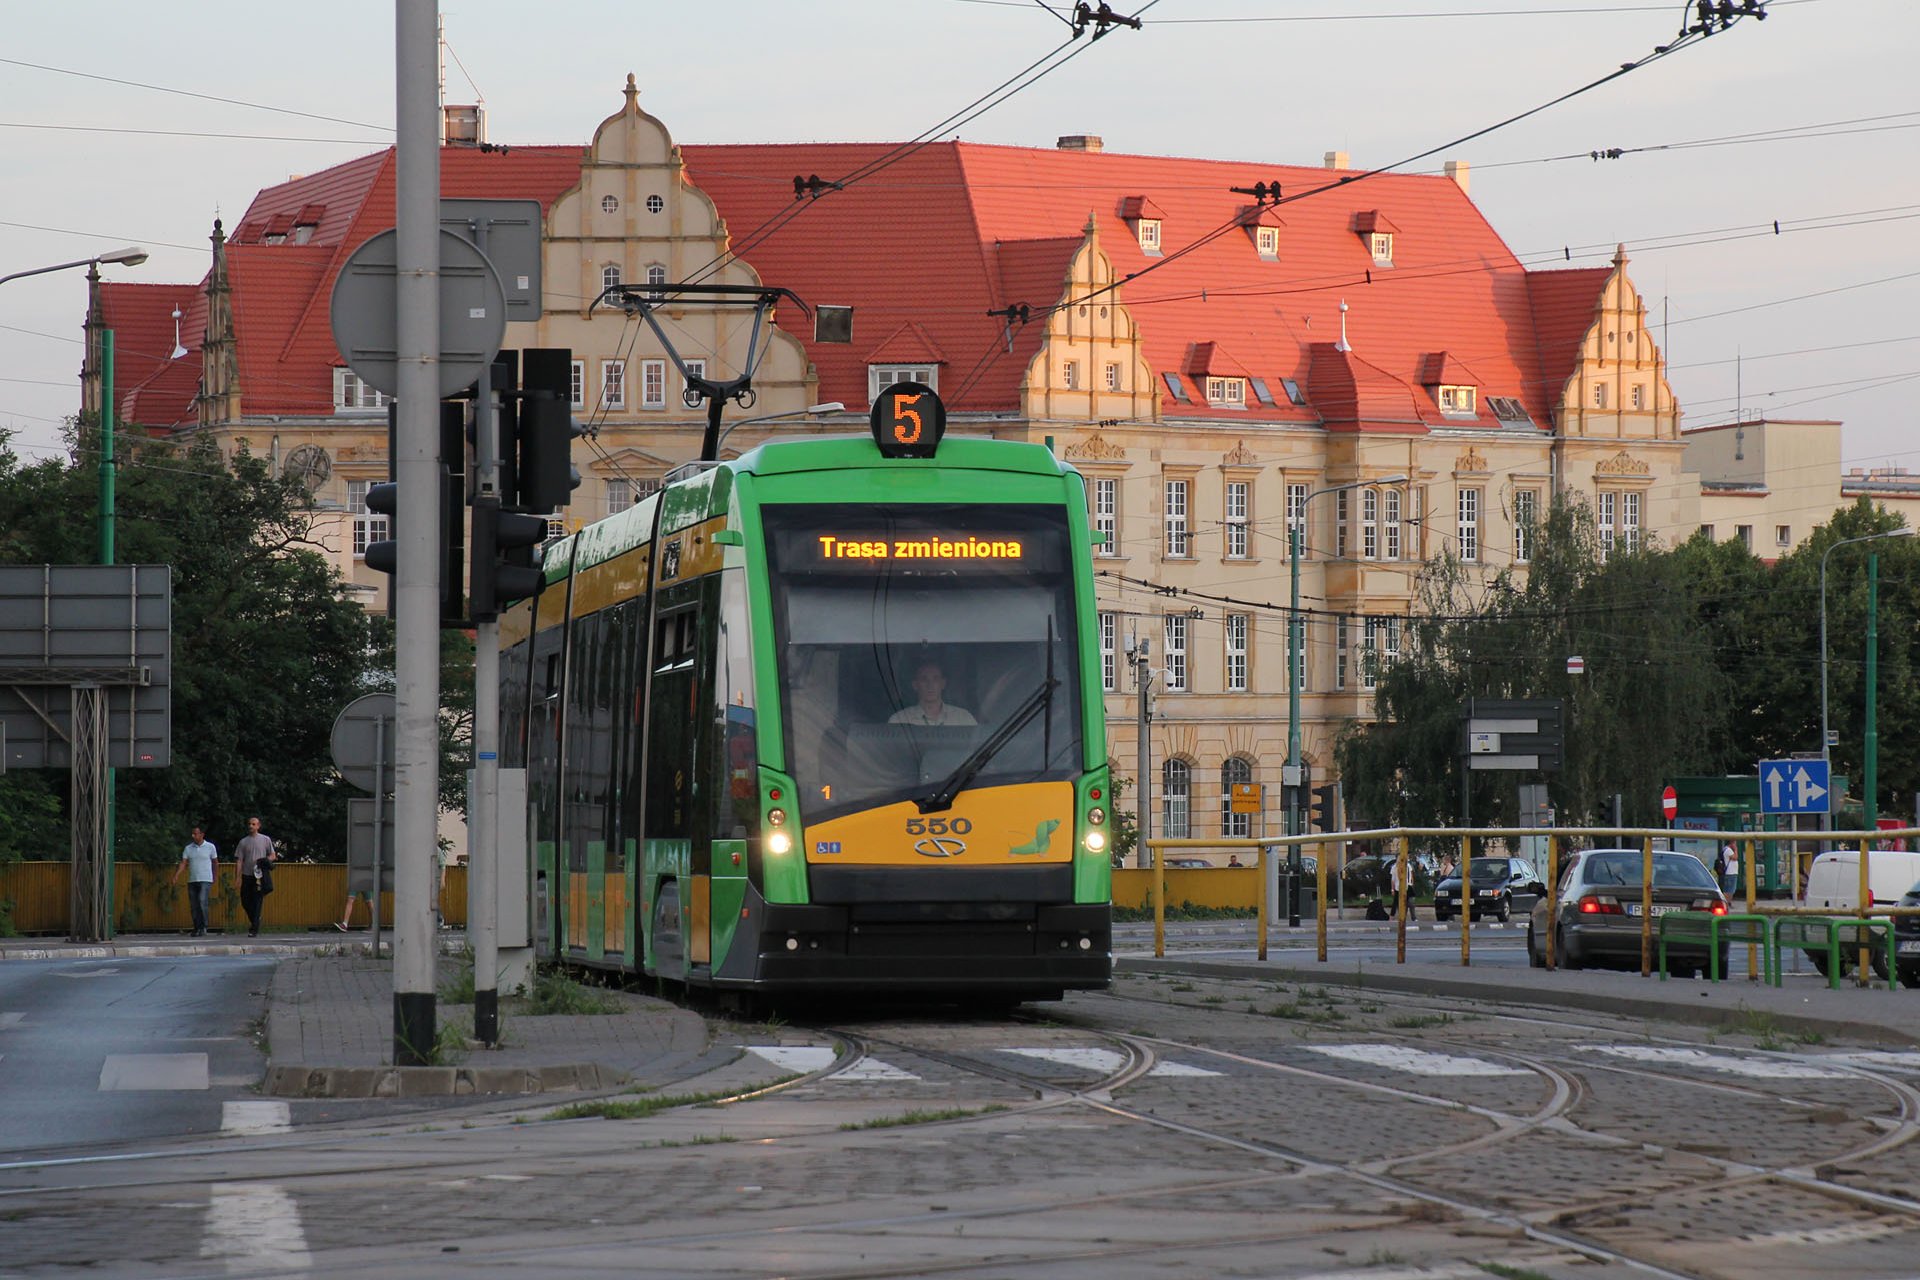 Tramino 550 Posen hat insgesamt 45 Fahrzeuge bestellt. Poznan ordered some 45 trams of this type.